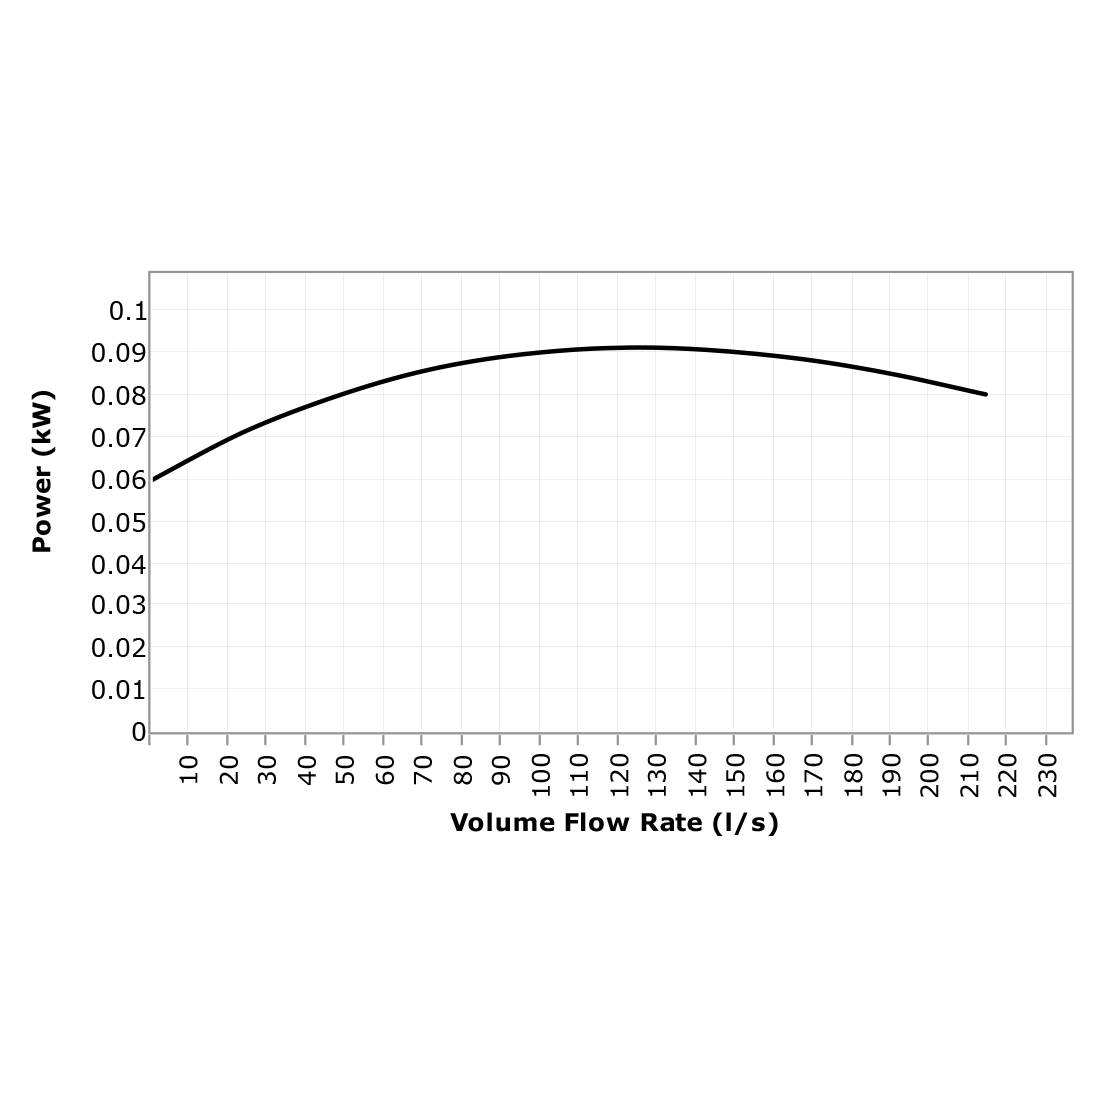 Range hood extraction fan volume flow rate power (kW) chart